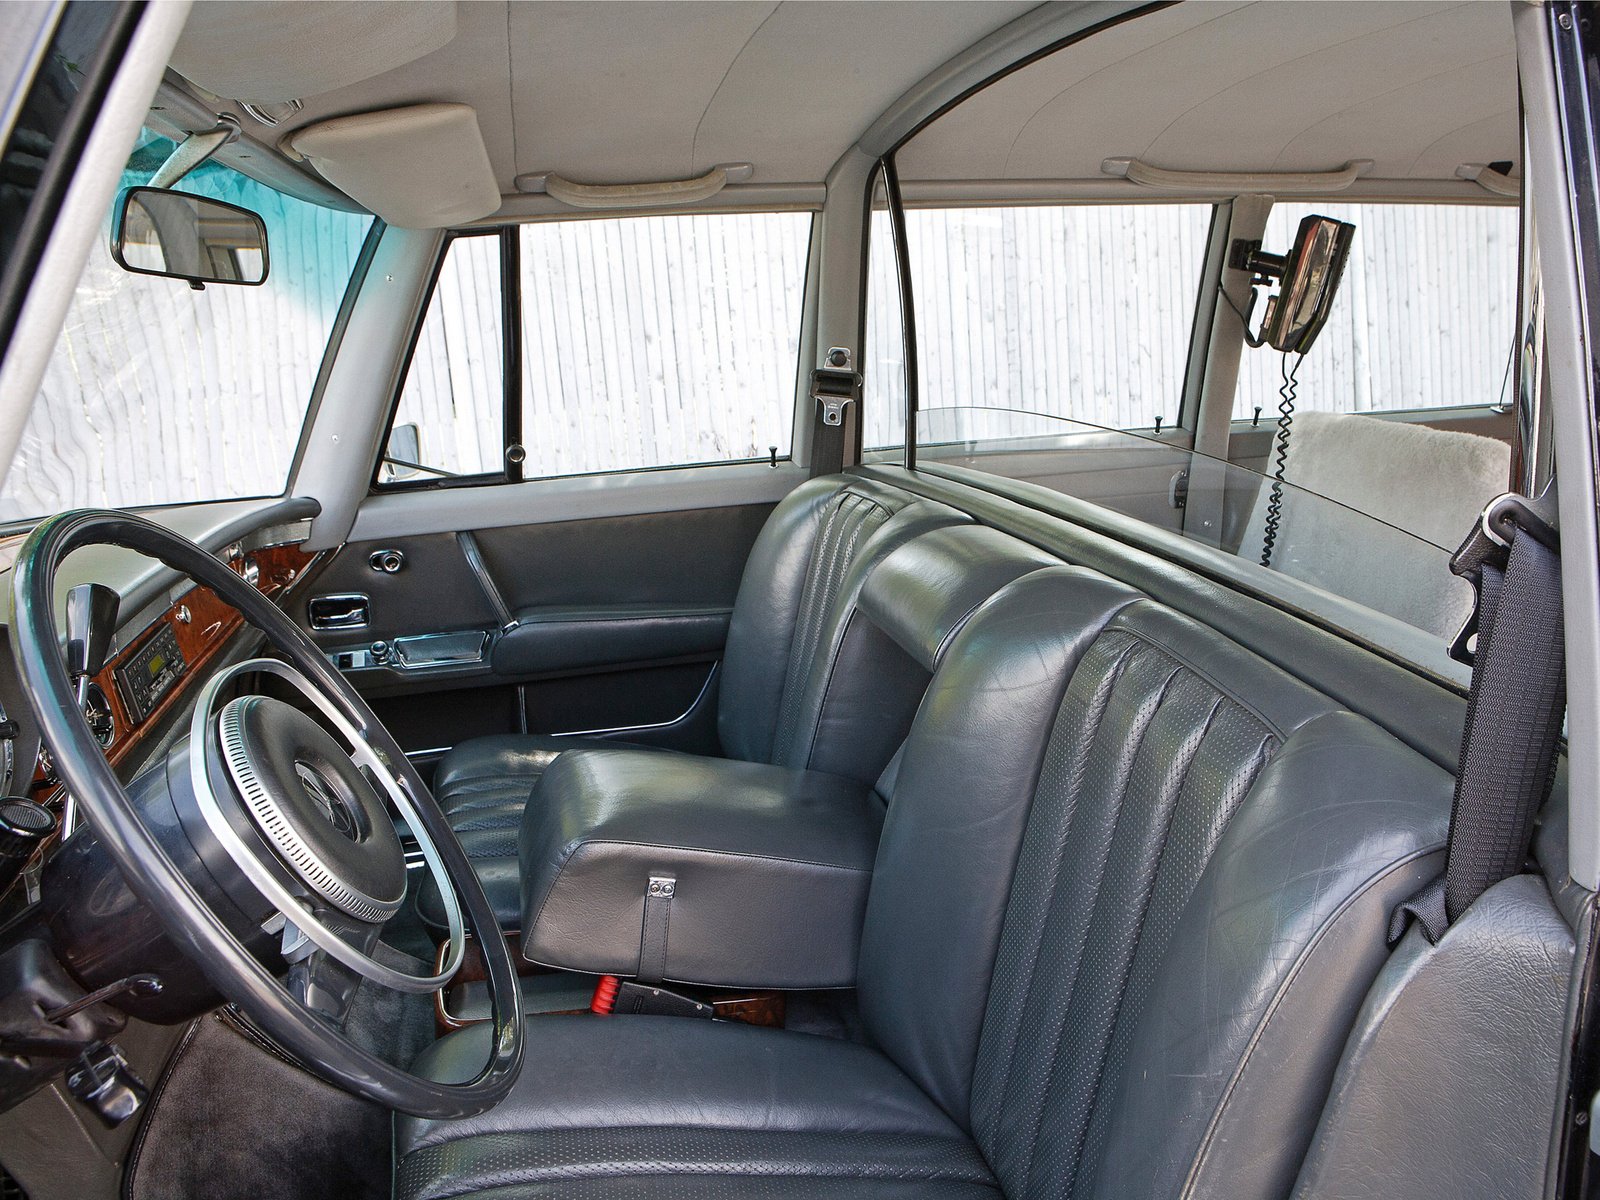 mercedes, Benz, 600, 6 door, Pullman, Limousine, Black, Classic, Cars, 1964 Wallpaper